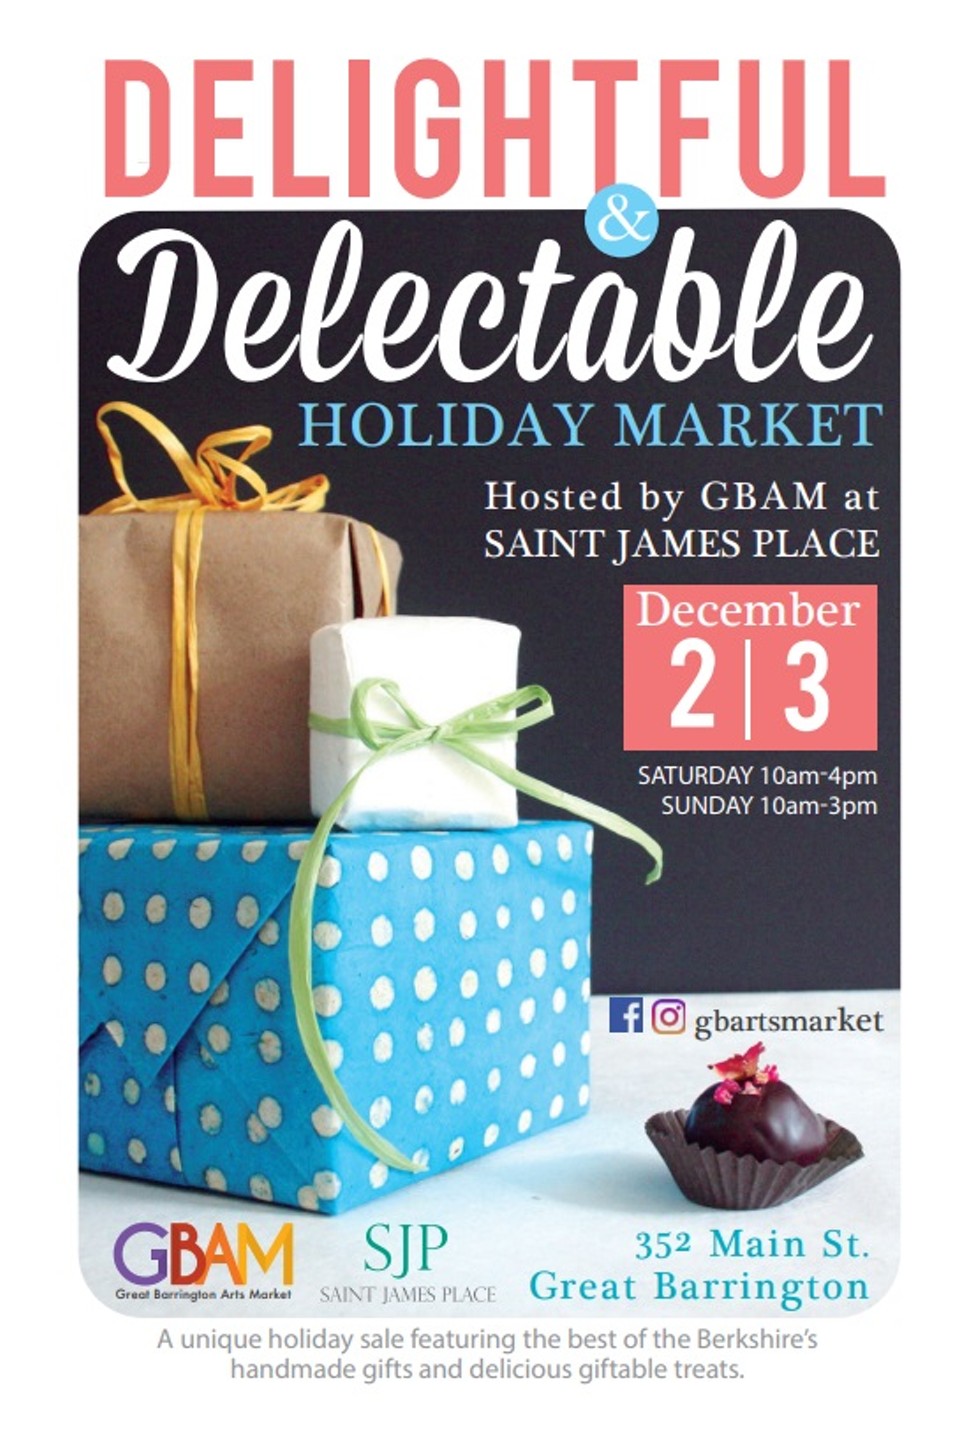 Great Barrington Arts Market - Delightful and Delectable Holiday Market- Dec 2 and Dec 3